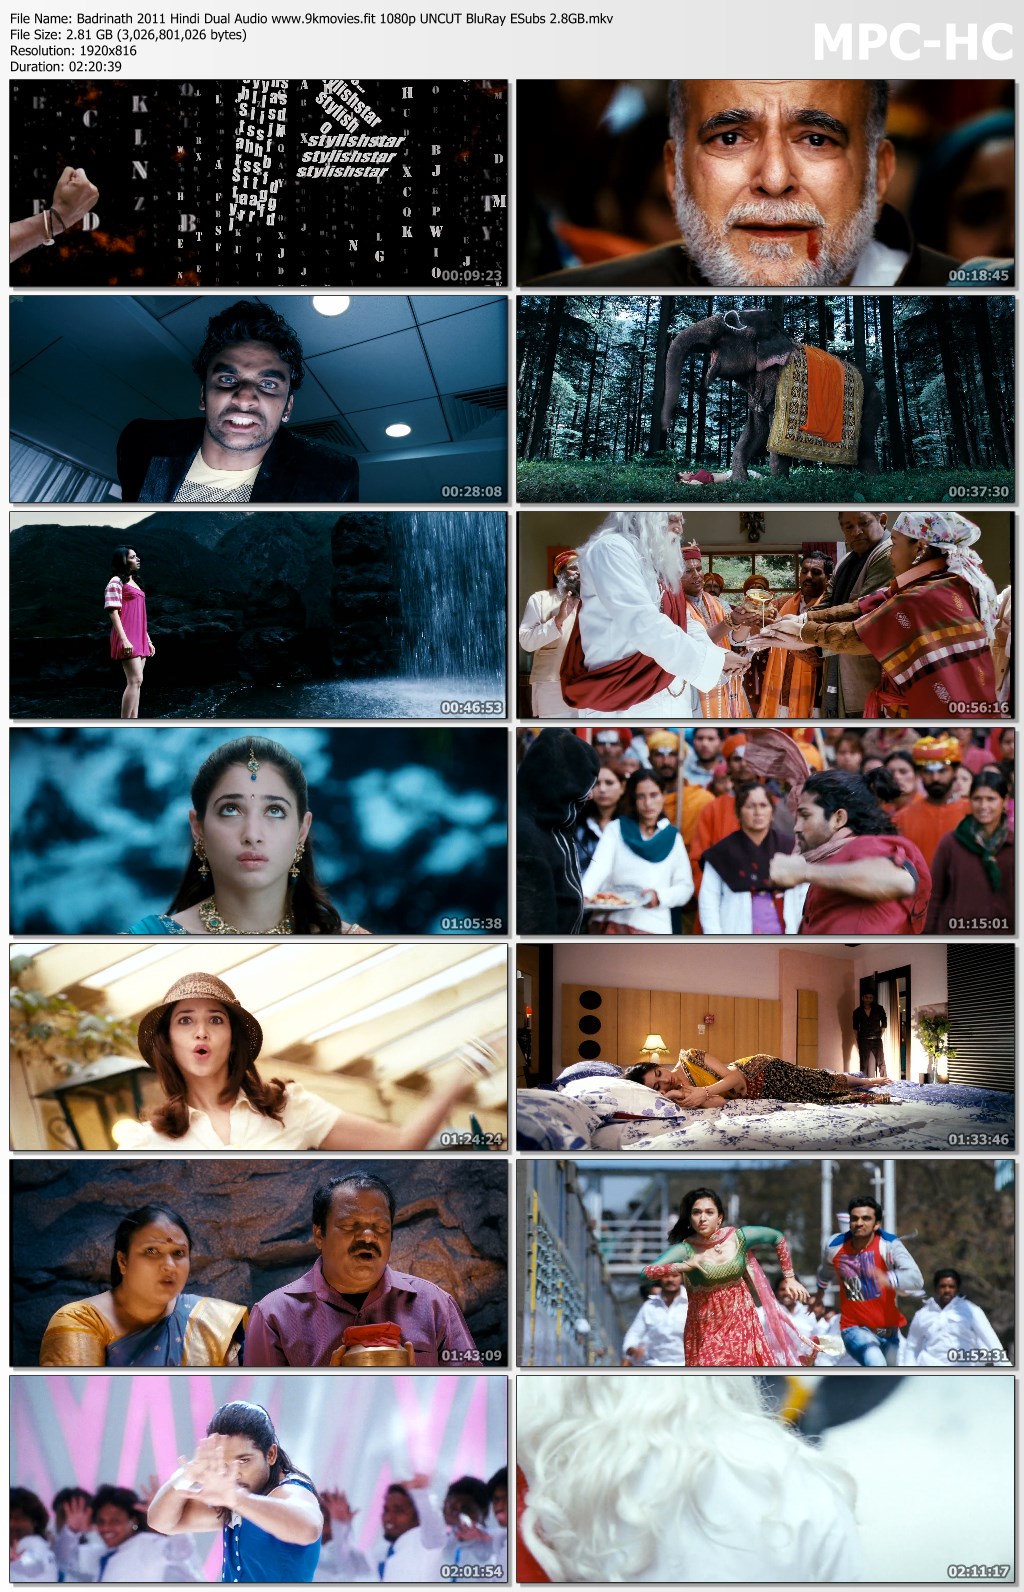 Pyaar Ka Punchnama 2 Movie Dual Audio 720p Download [NEW] Badrinath-2011-Hindi-Dual-Audio-www.9kmovies.fit-1080p-UNCUT-BluRay-ESubs-2.8GB.mkv_thumbs